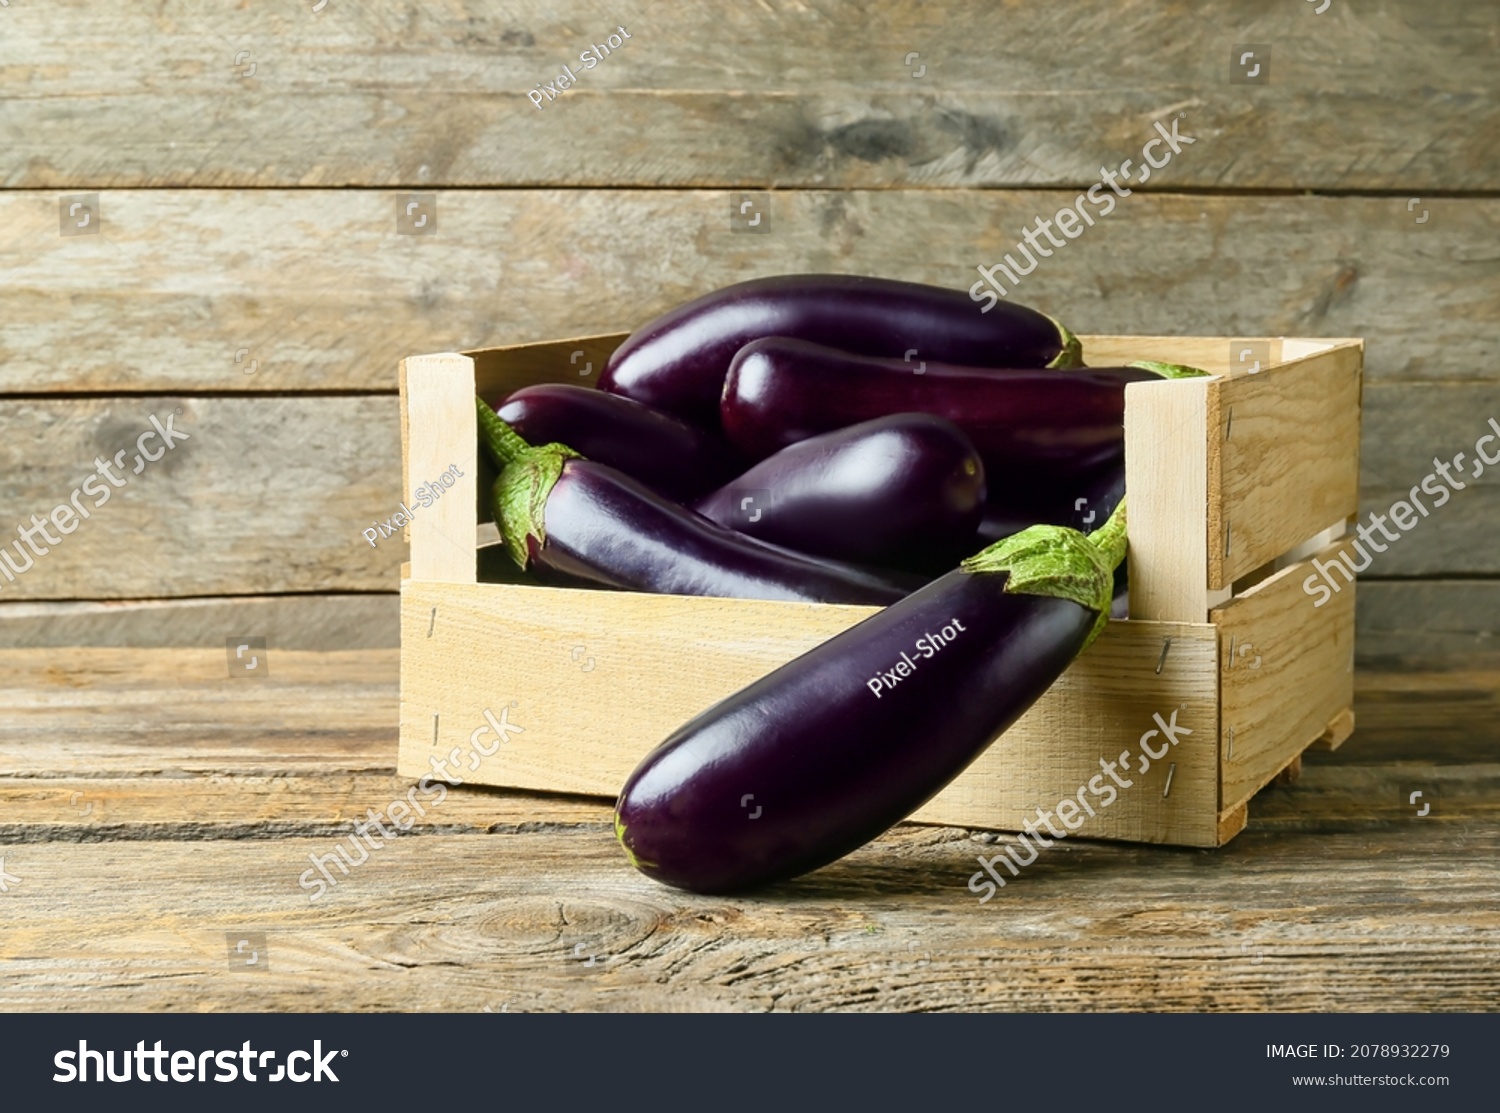 Eggplants and Boxes